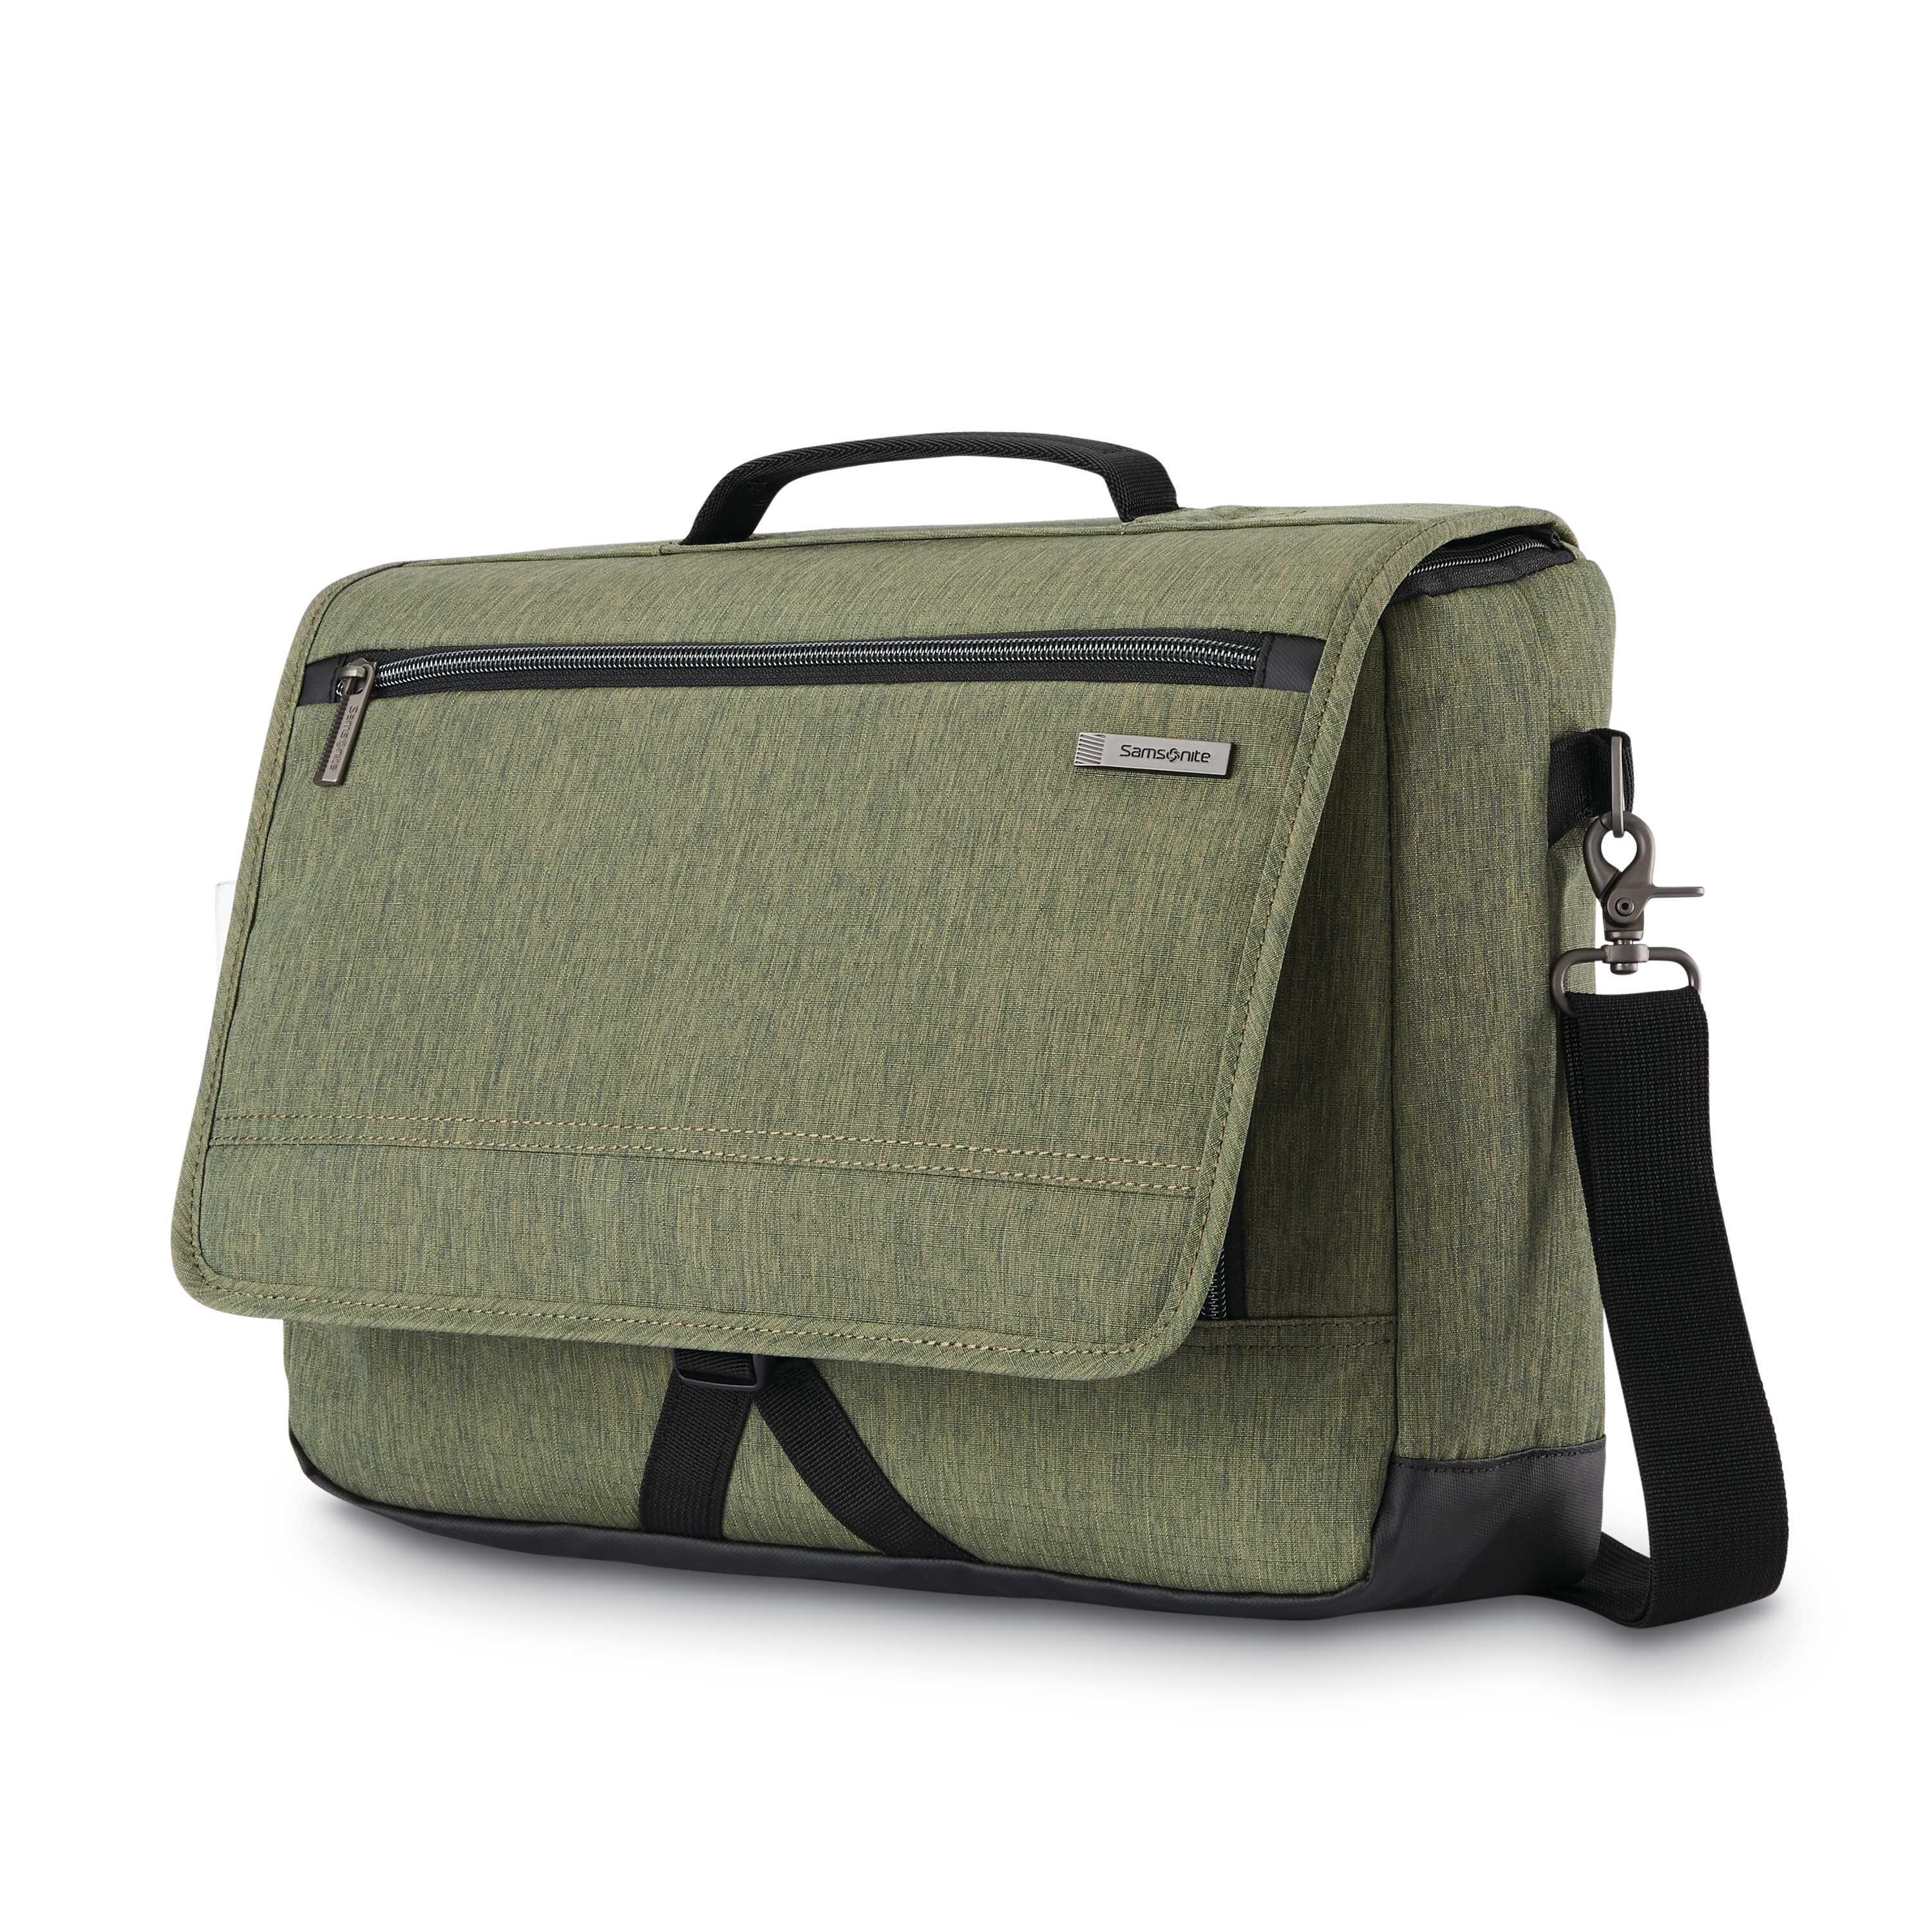 Samsonite Synthetic Modern Utility Messenger Bag in Olive (Green) for Men - Save 77% - Lyst